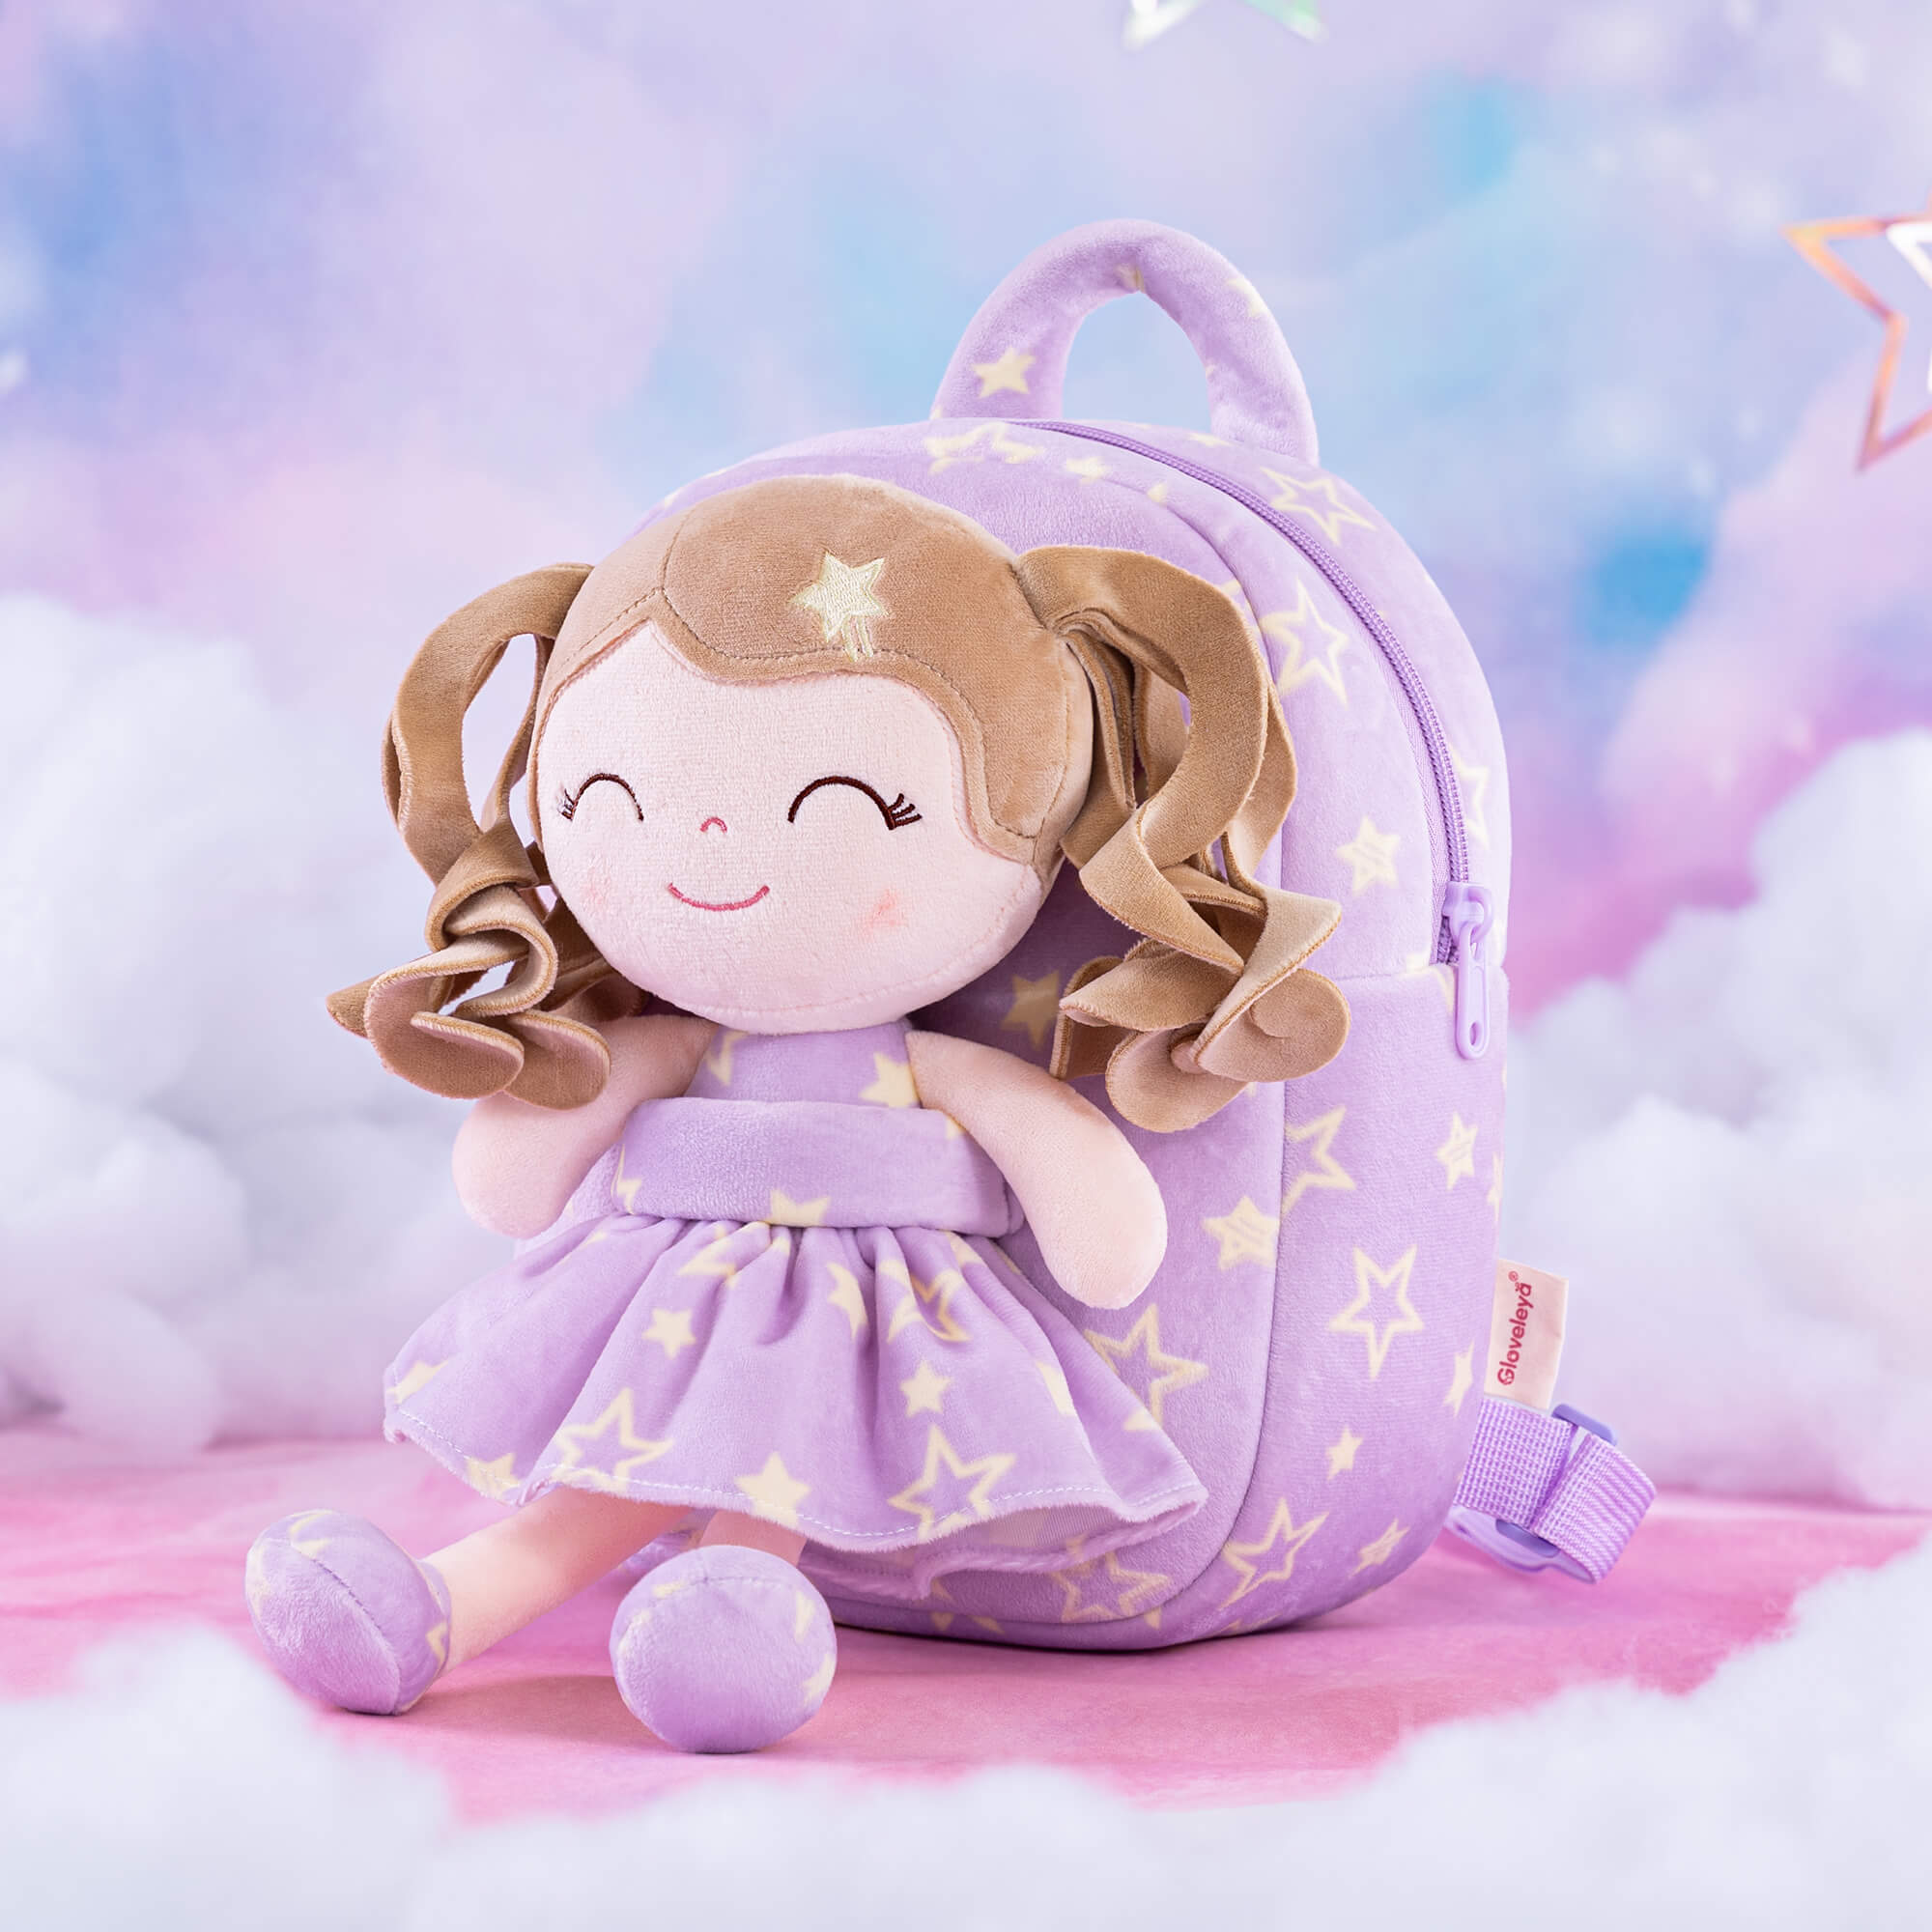 Gloveleya 9-inch Personalized Plush Curly Star Dolls Backpack Purple